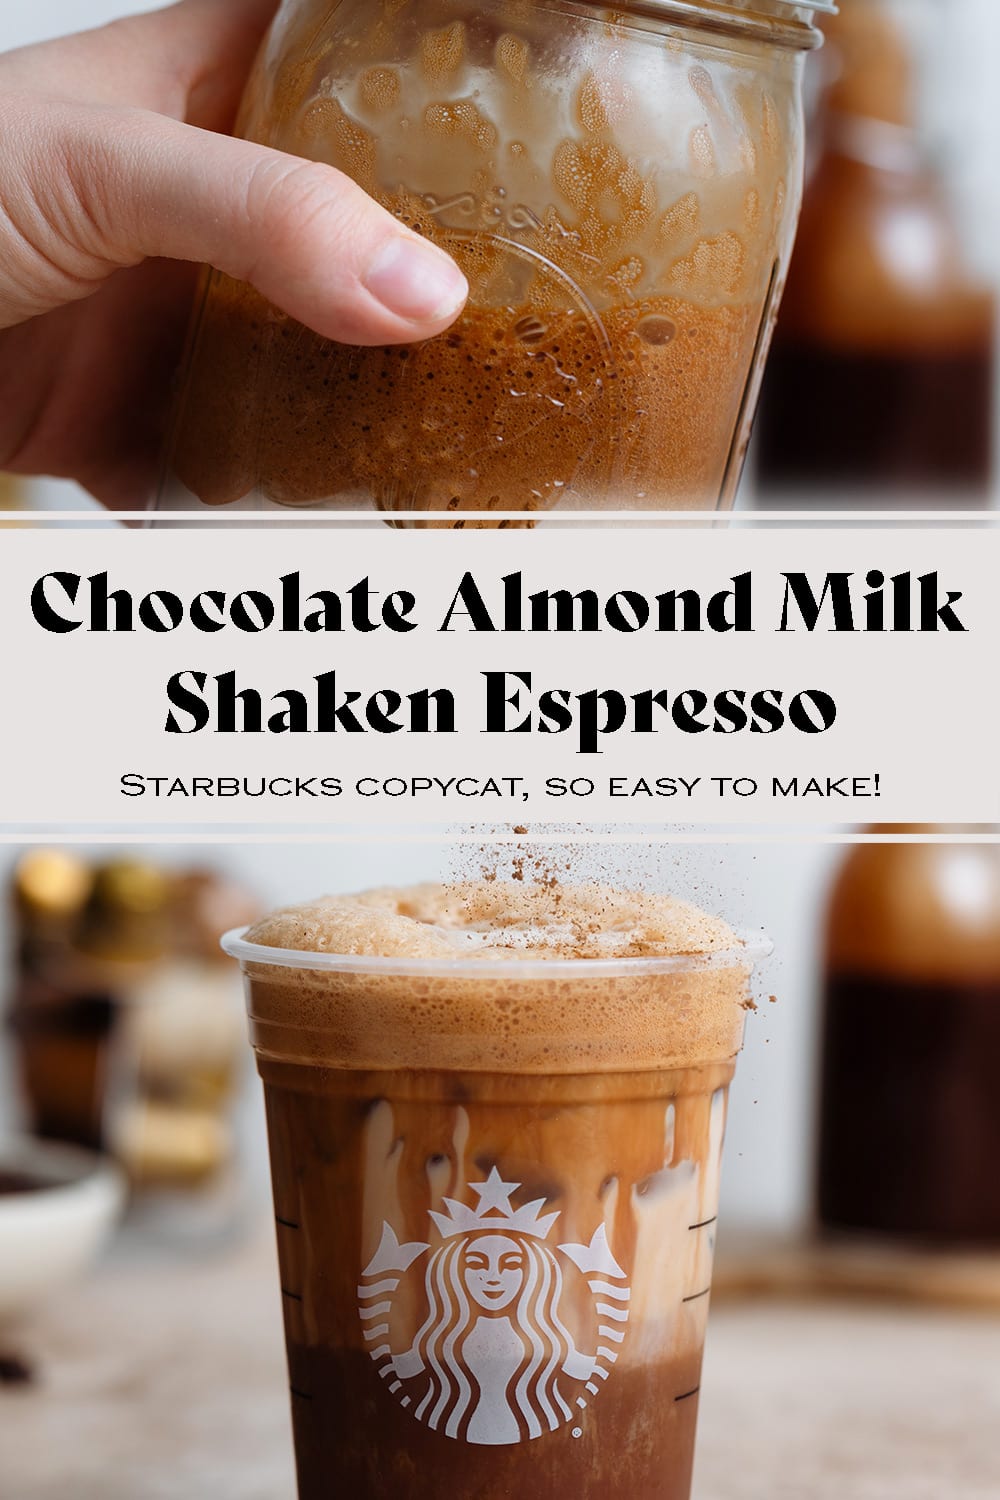 Iced Chocolate Almondmilk Shaken Espresso